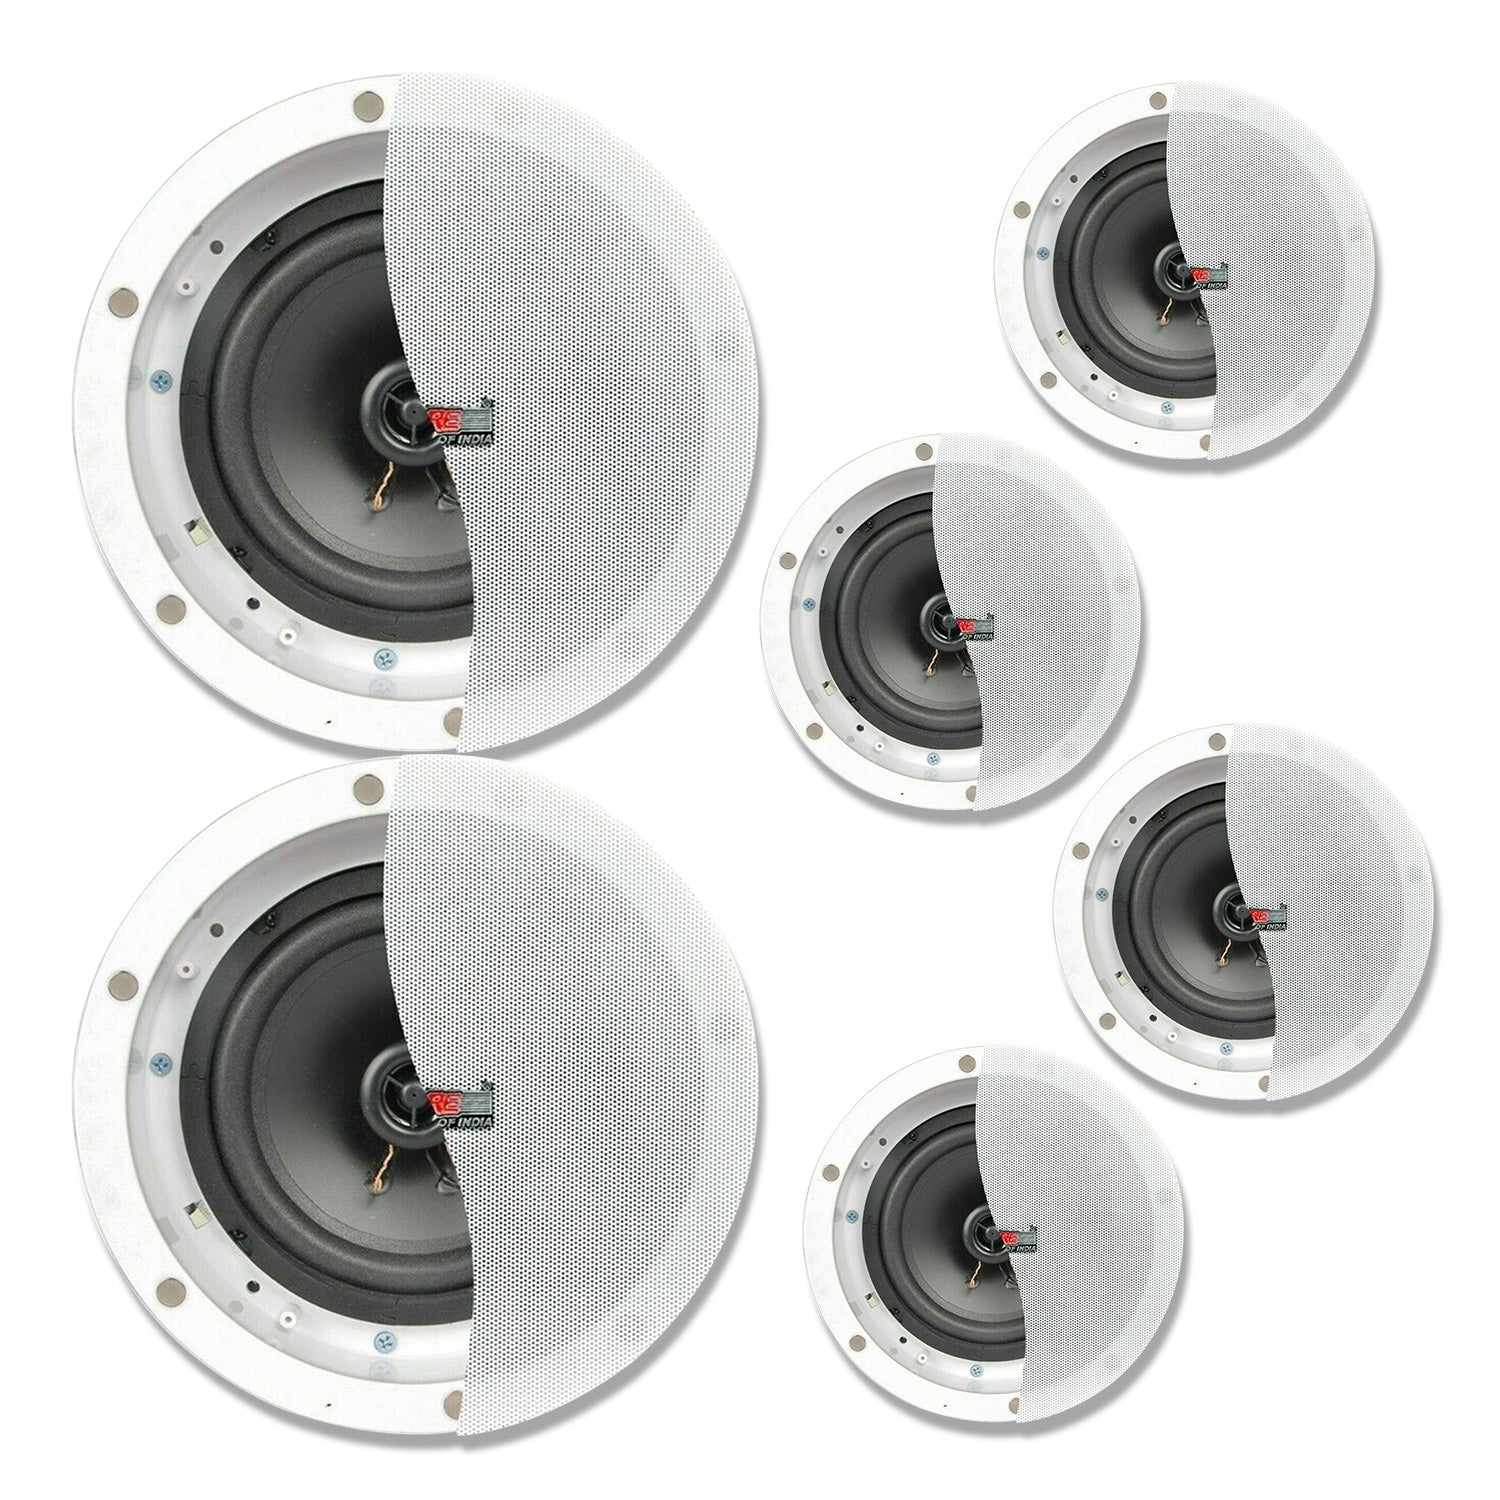 5Core Ceiling Speakers 6.5 inch In Wall Speaker Ceiling Mount 60 Watt Peak 2-Way w Dynamic Tweeter